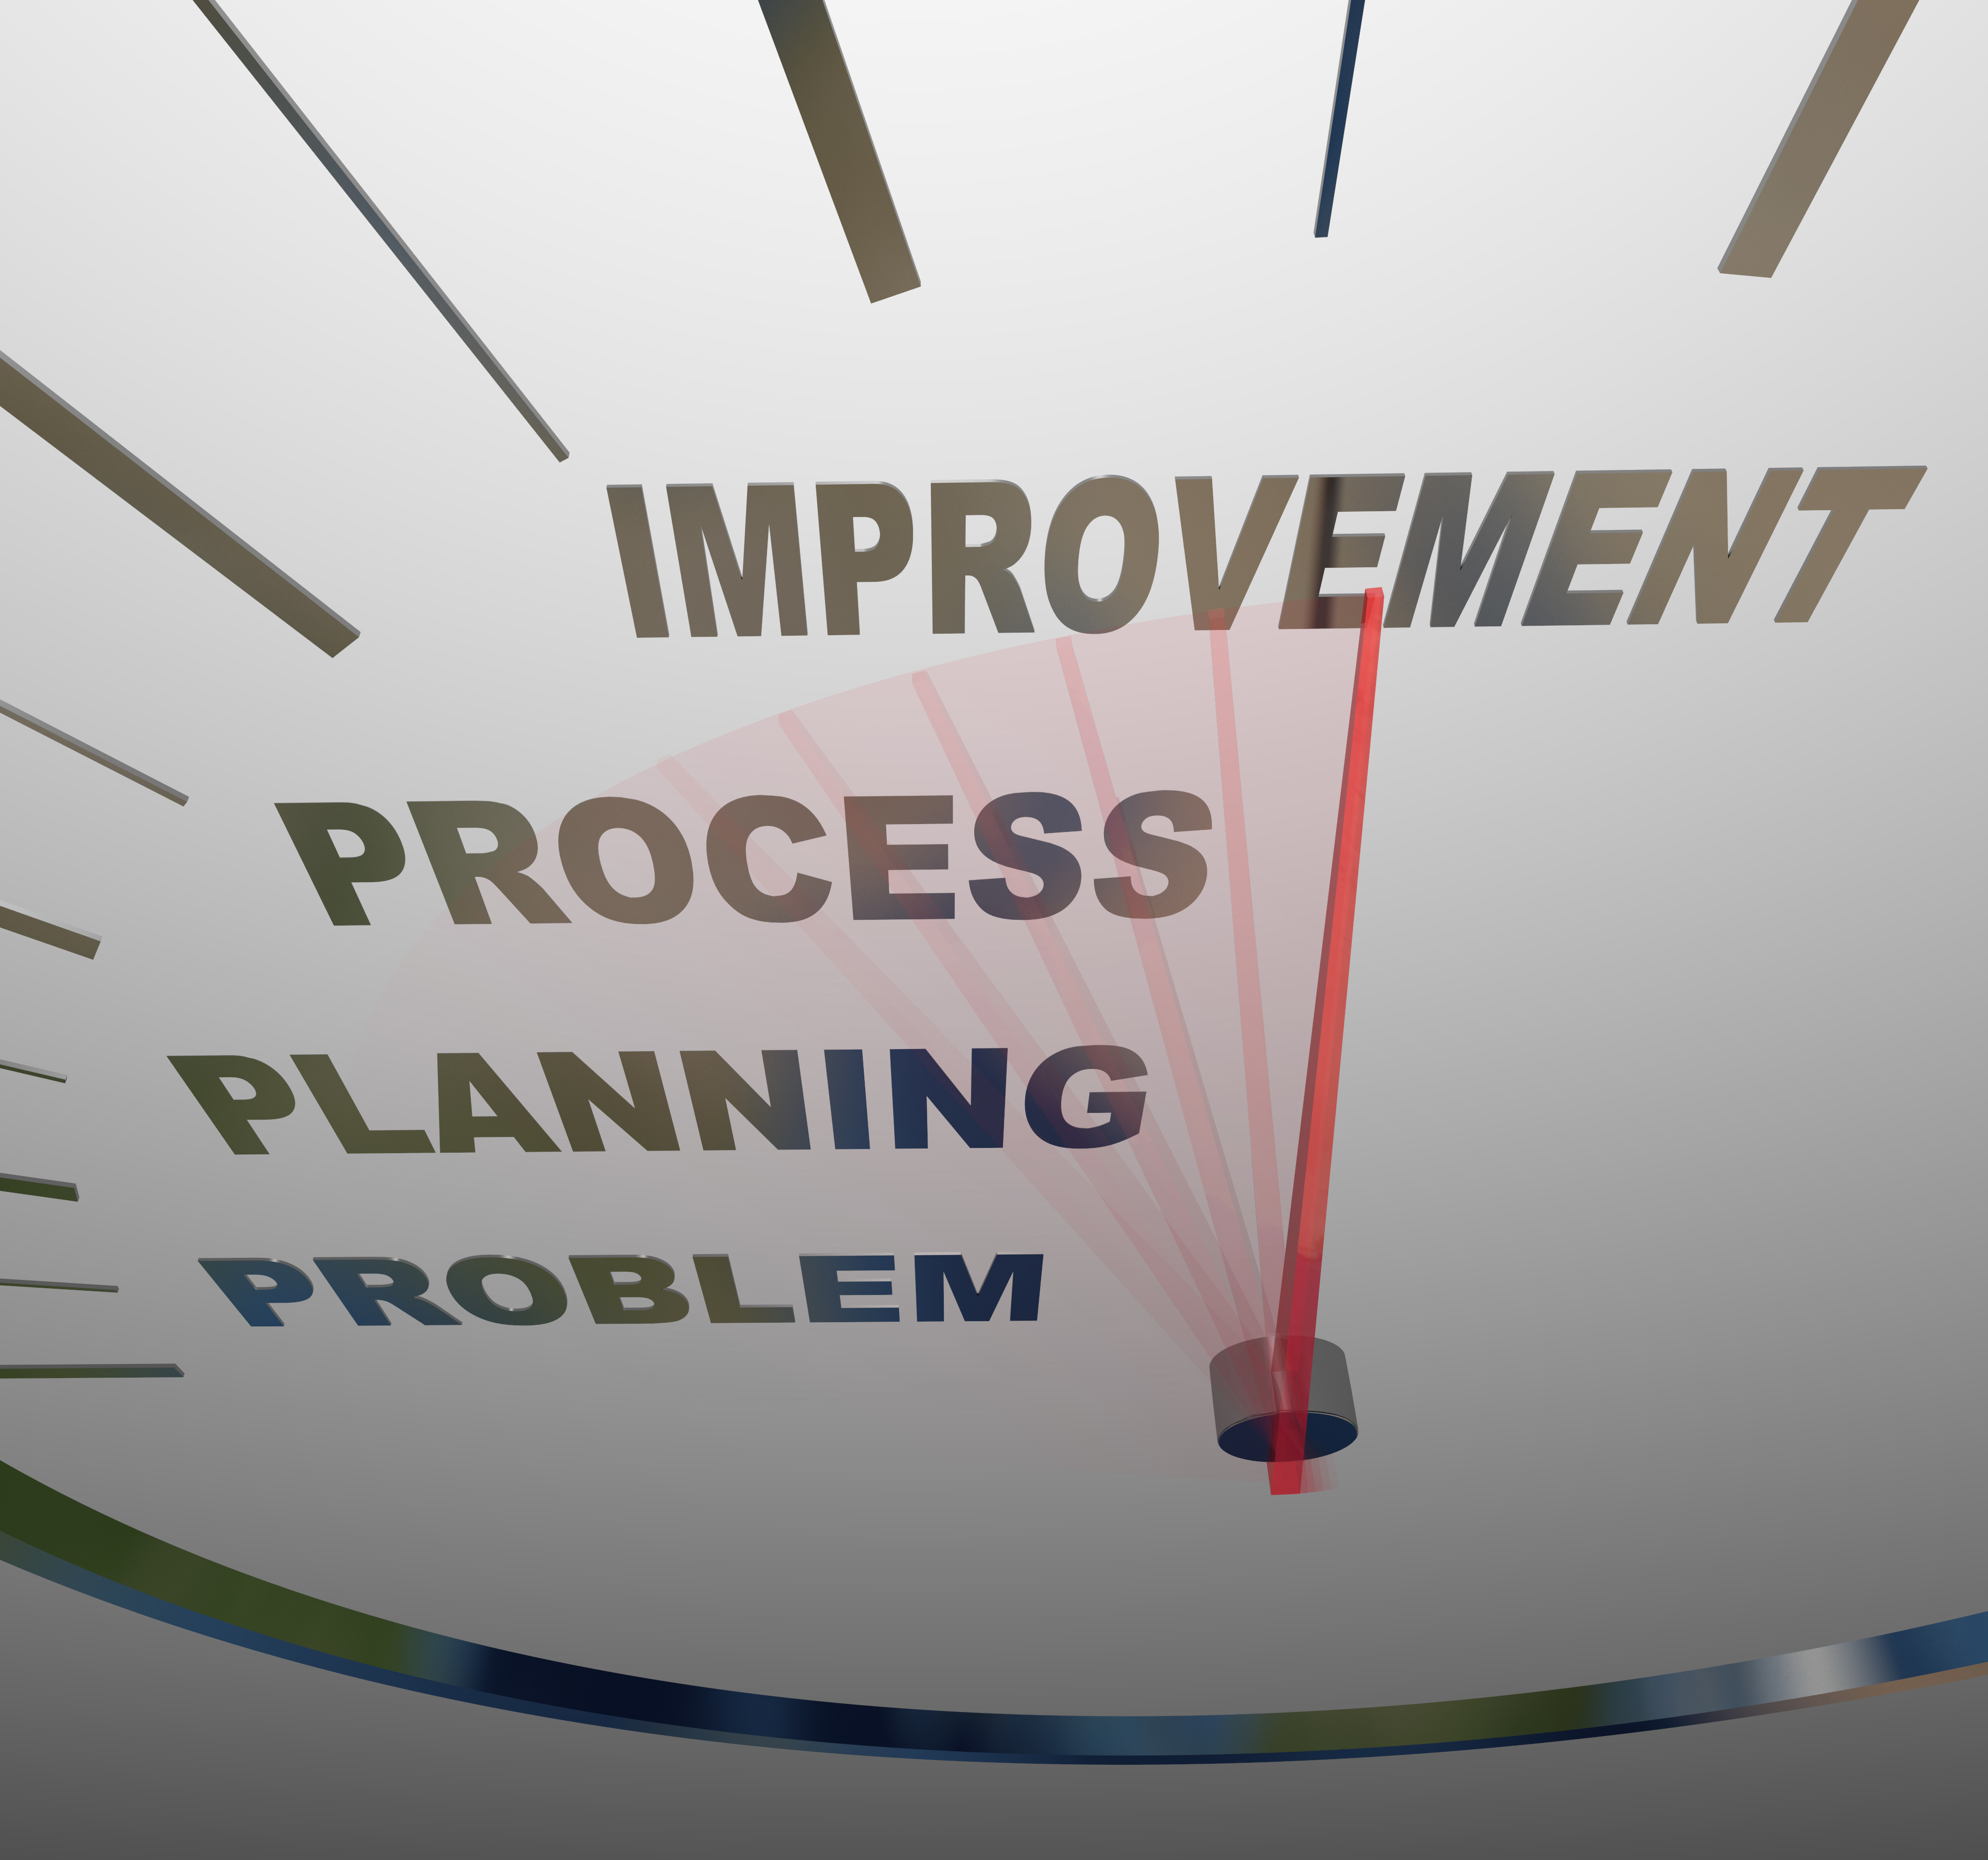 Improvement process planning problem